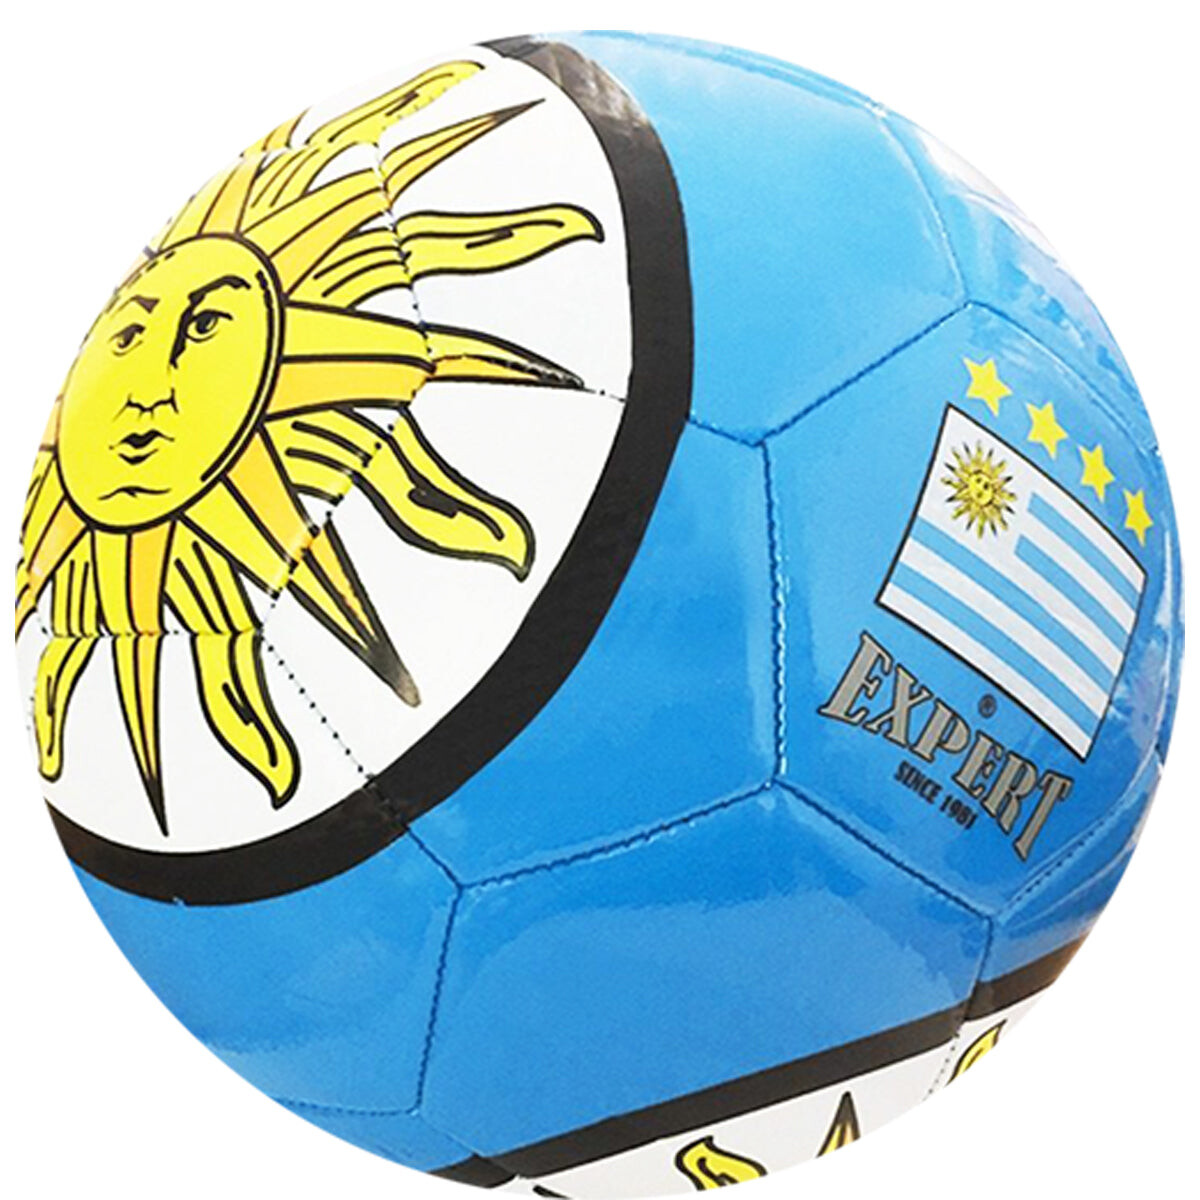 Pelota Expert N5 Fútbol Diseño Uruguay Profesional - Celeste 